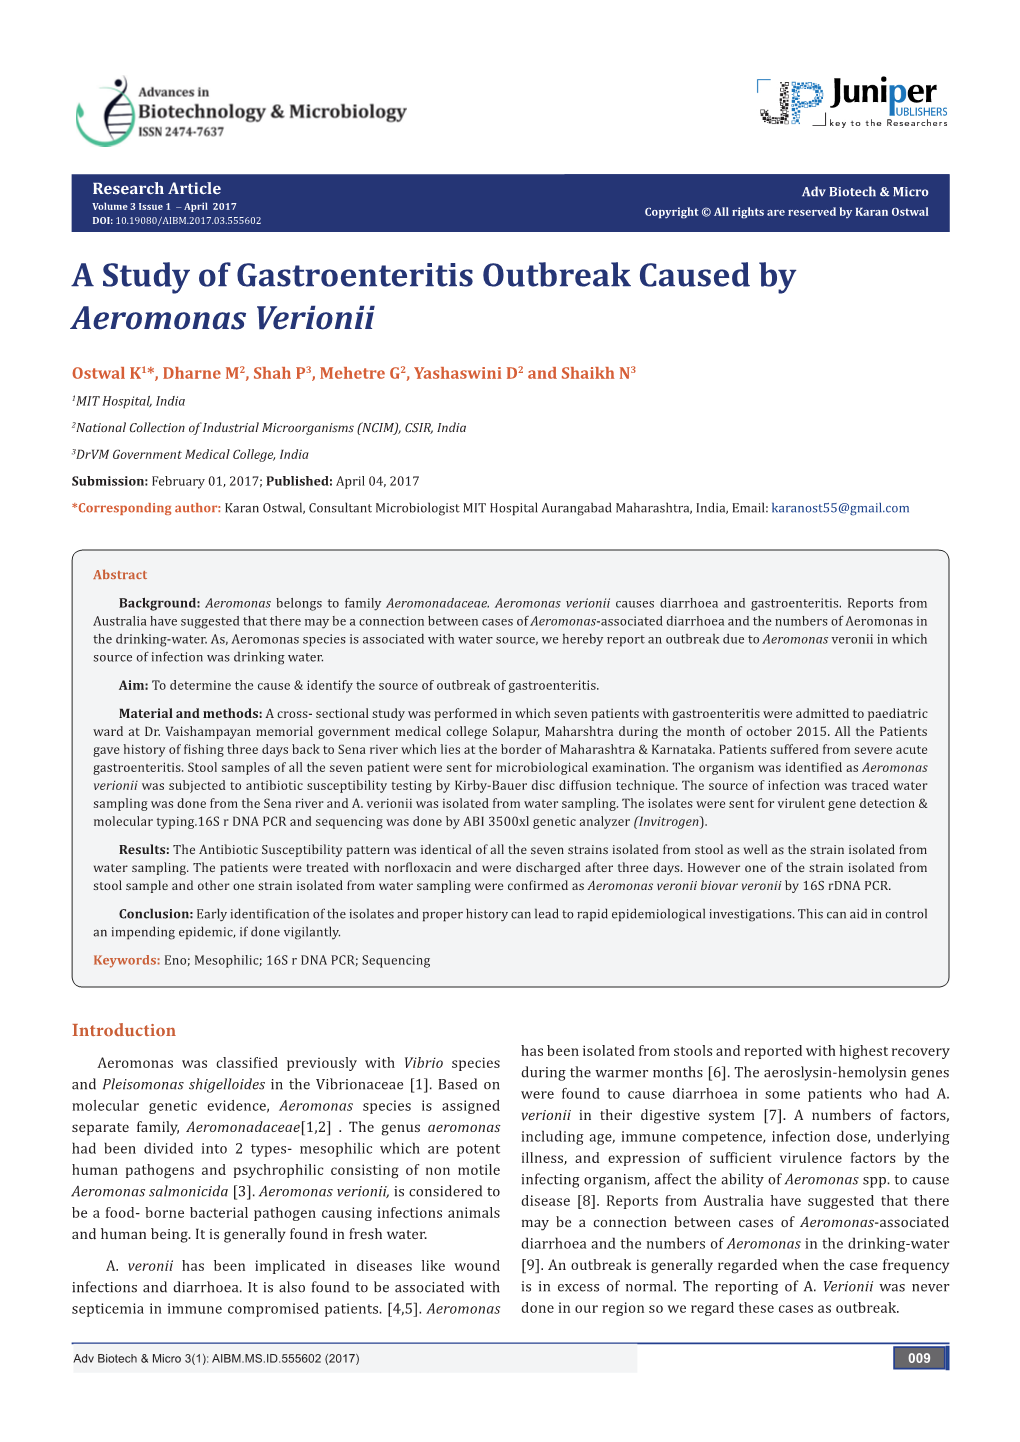 A Study of Gastroenteritis Outbreak Caused by Aeromonas Verionii